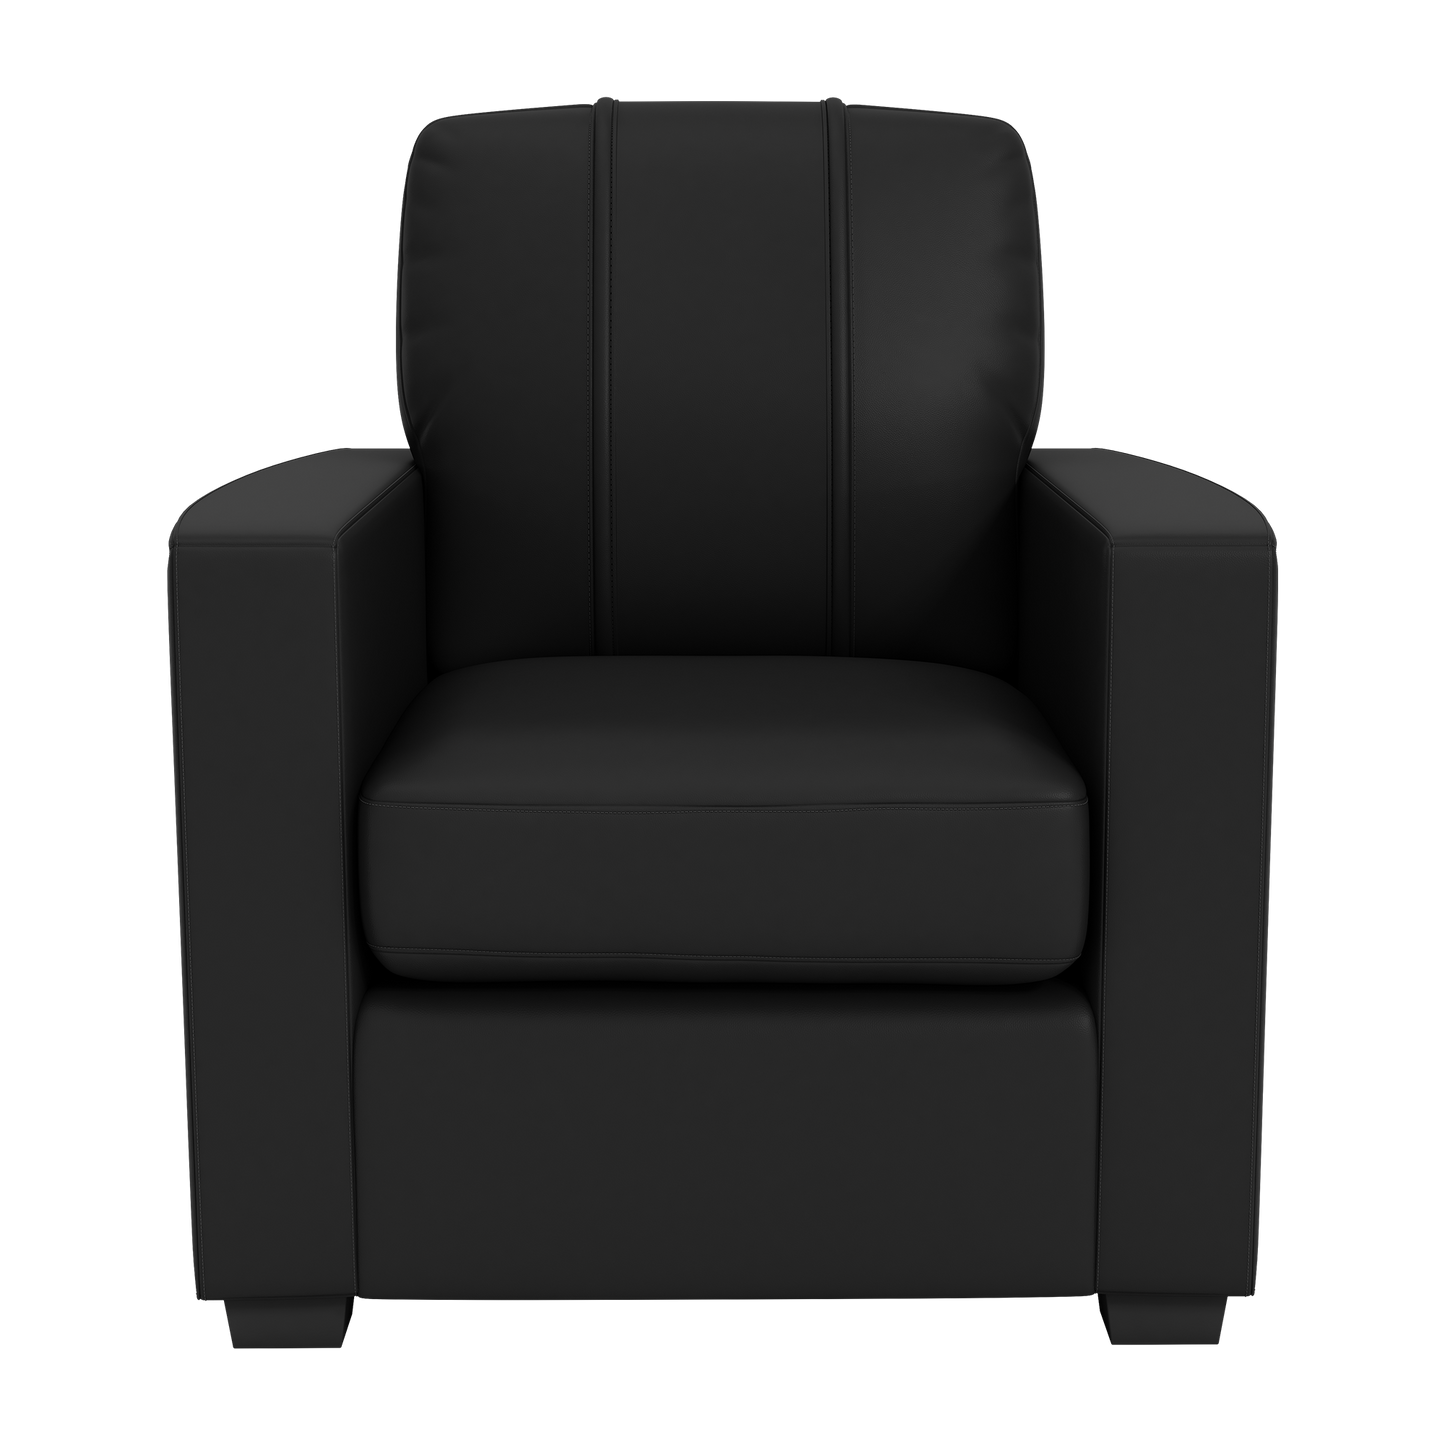 Silver Club Chair with Major League Soccer Alternate Logo